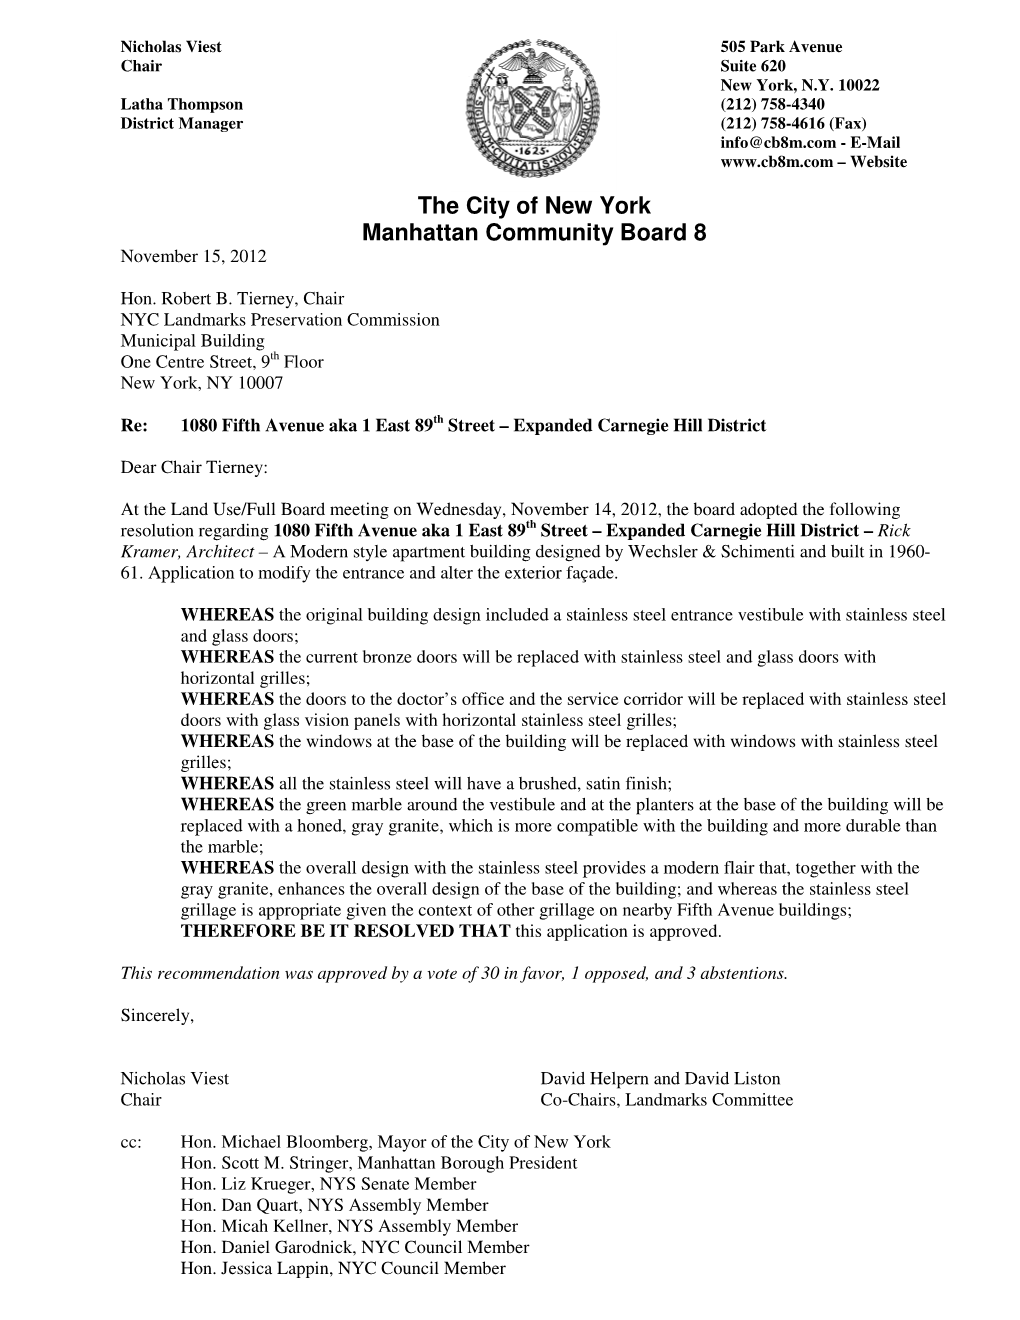 The City of New York Manhattan Community Board 8 November 15, 2012